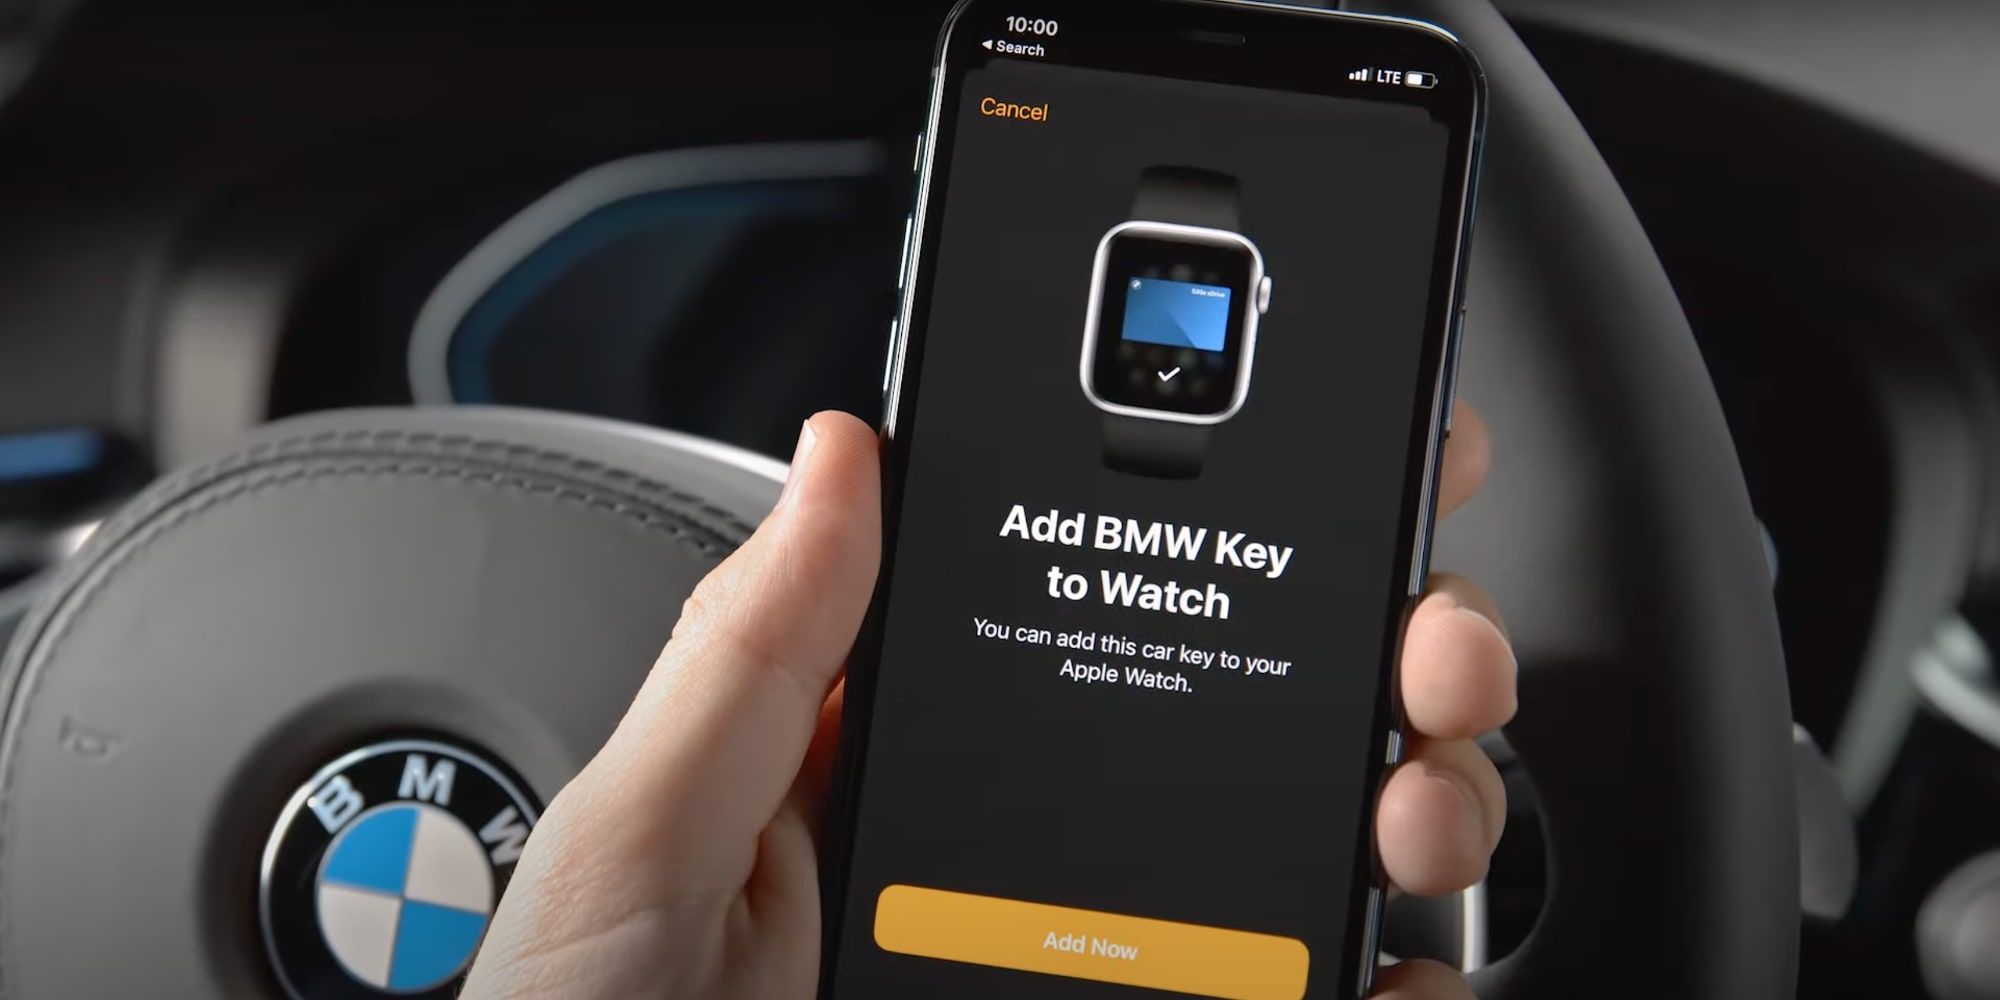 Apple Car Key Setup For Apple Watch BMW Steering Wheel In BG